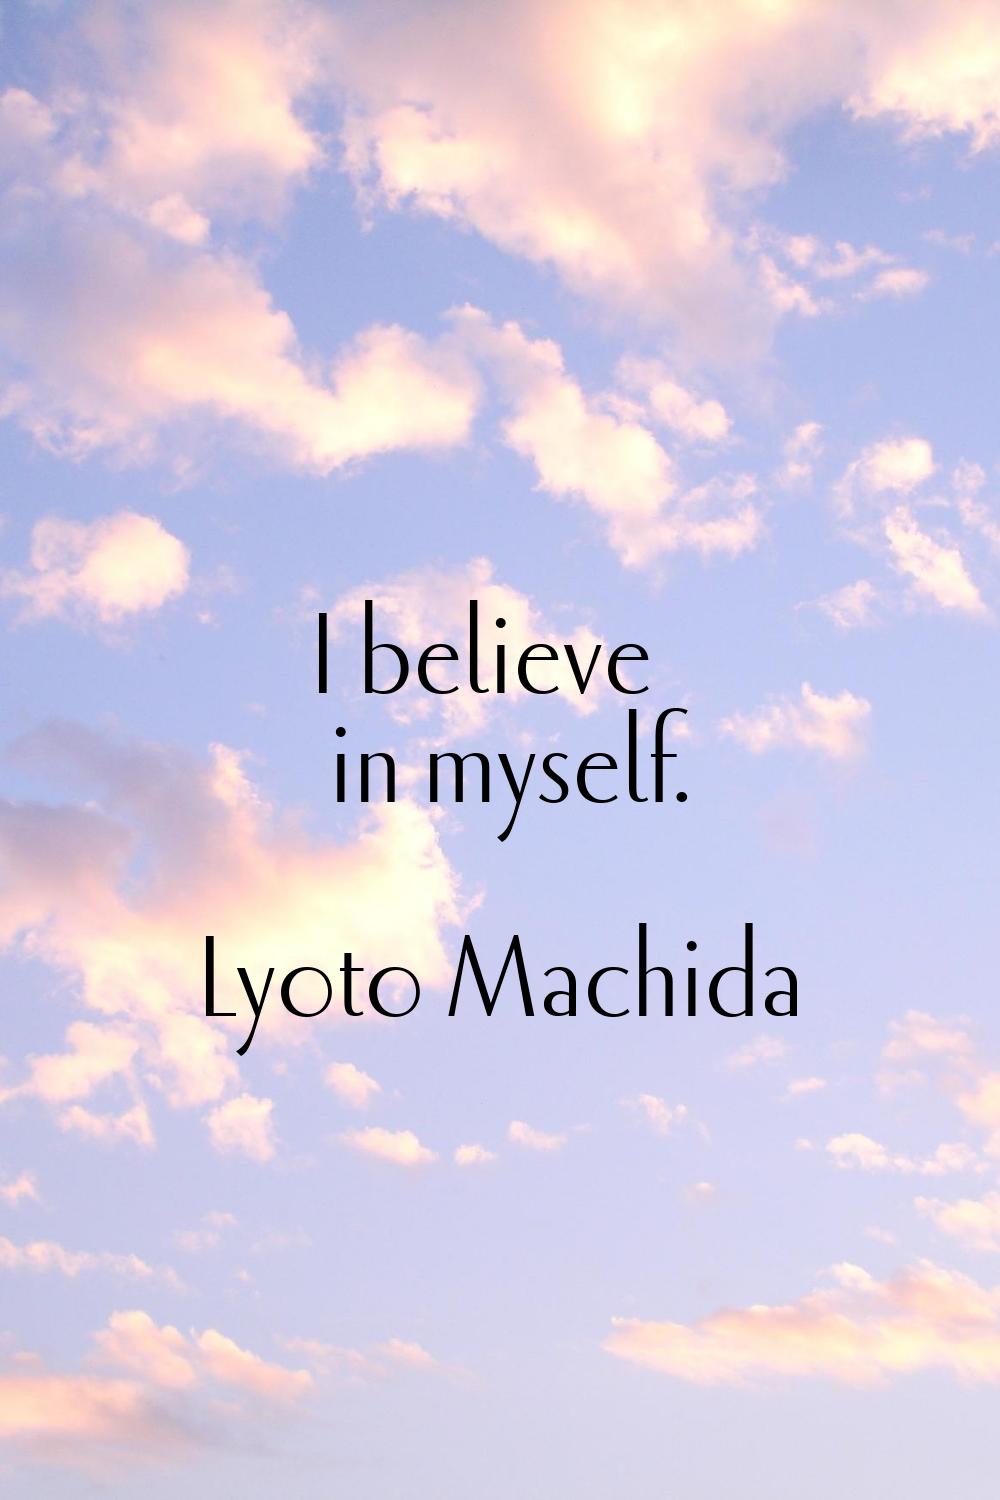 I believe in myself.